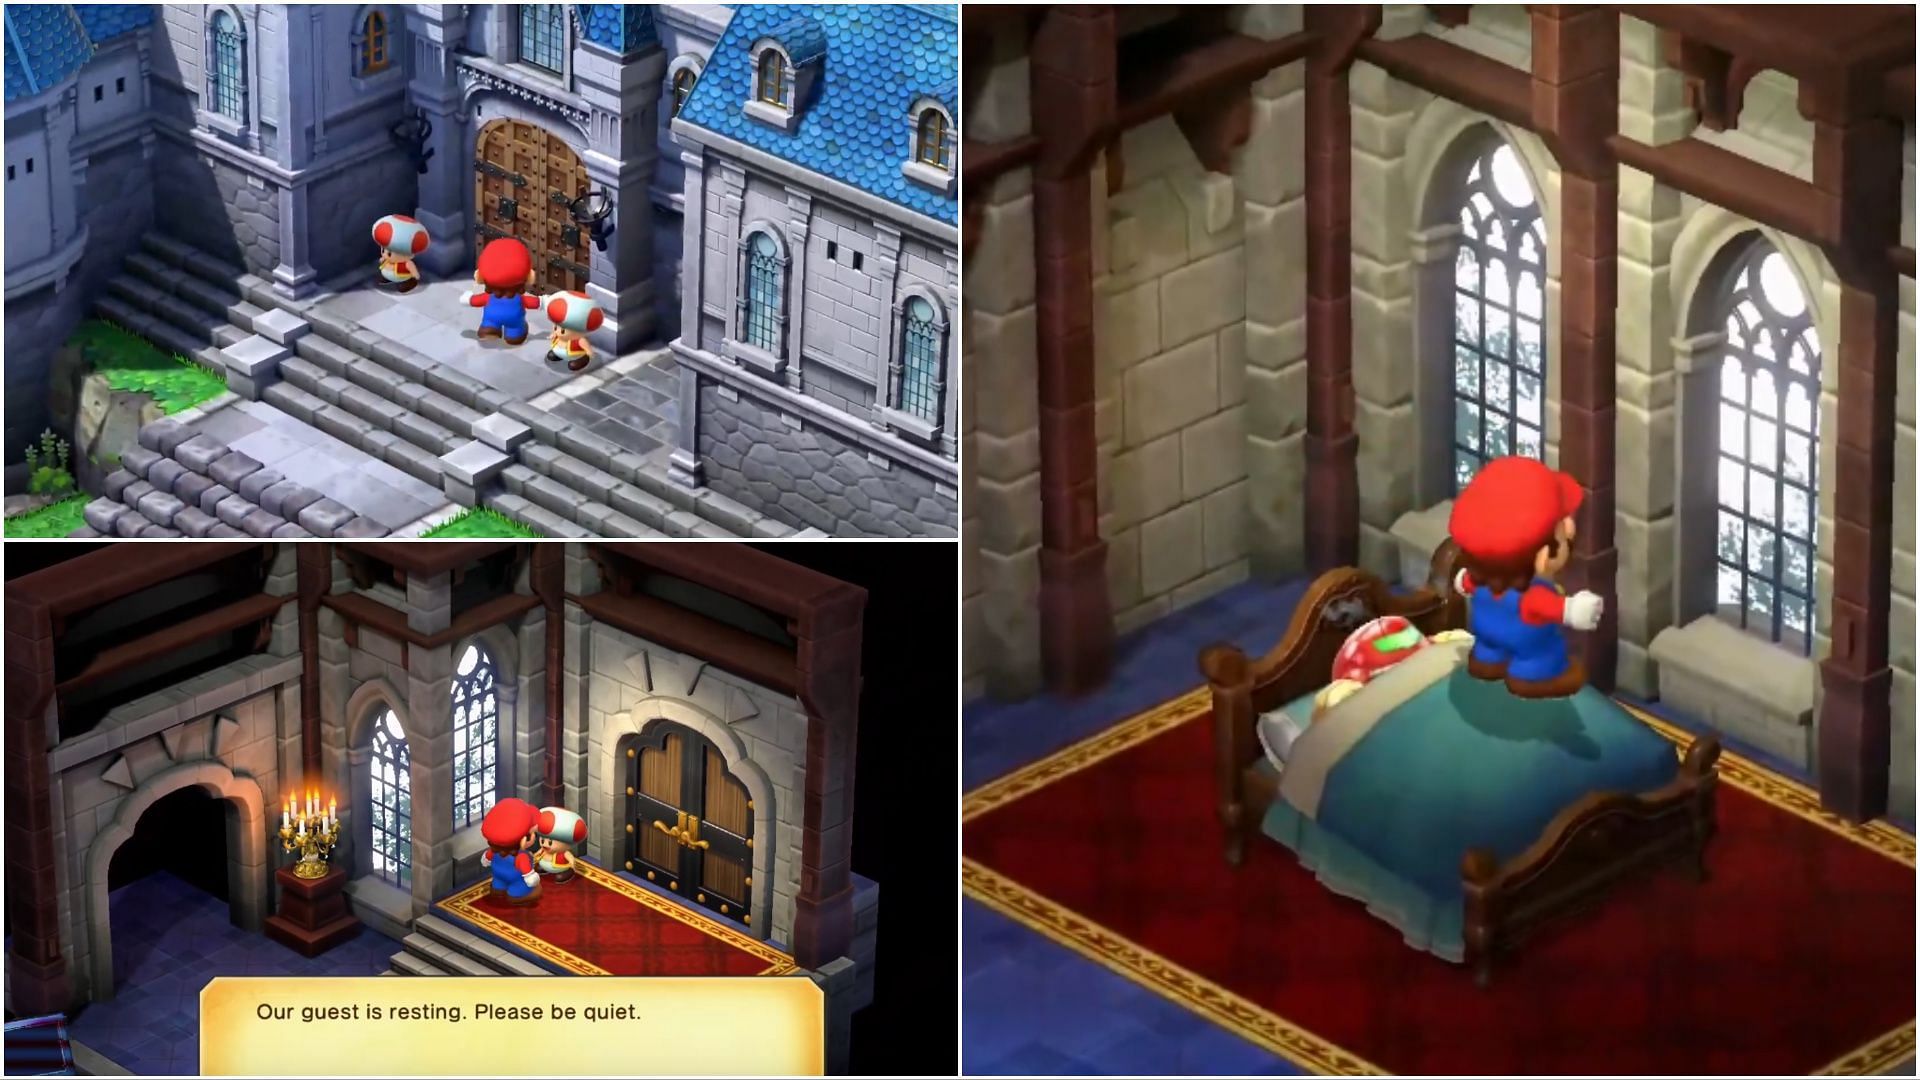 Pass through the door to access a bedroom (Image via Nintendo)